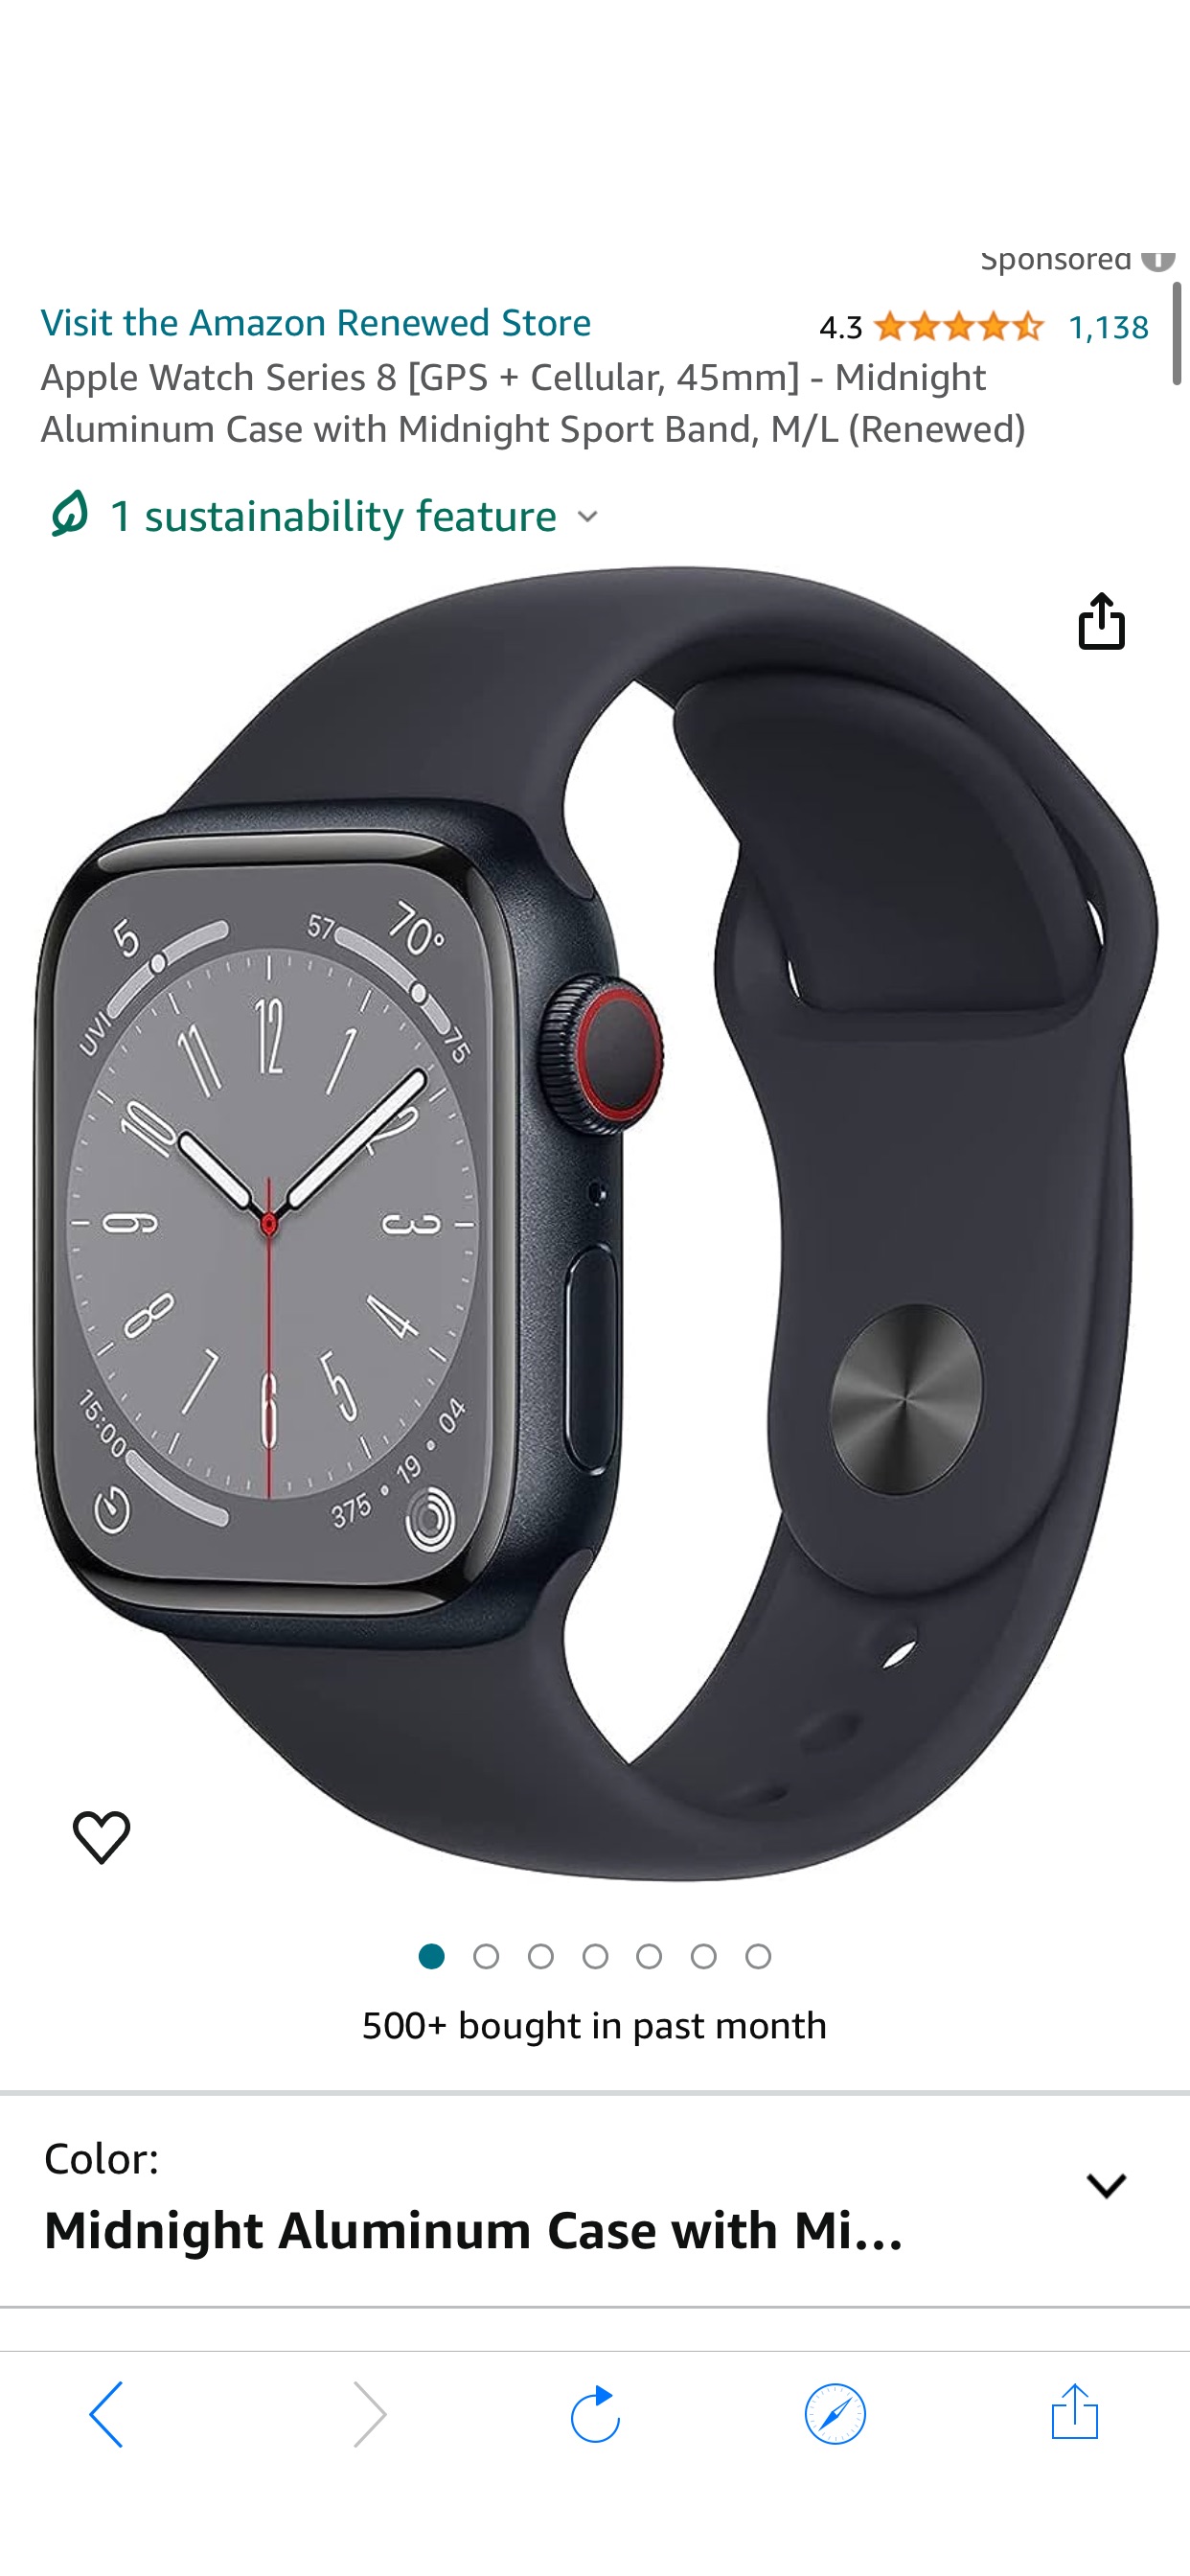 Amazon.com: Apple Watch Series 8 [GPS + Cellular, 45mm] - Midnight Aluminum Case with Midnight Sport Band, M/L (Renewed) : Electronics 苹果手表 翻新版